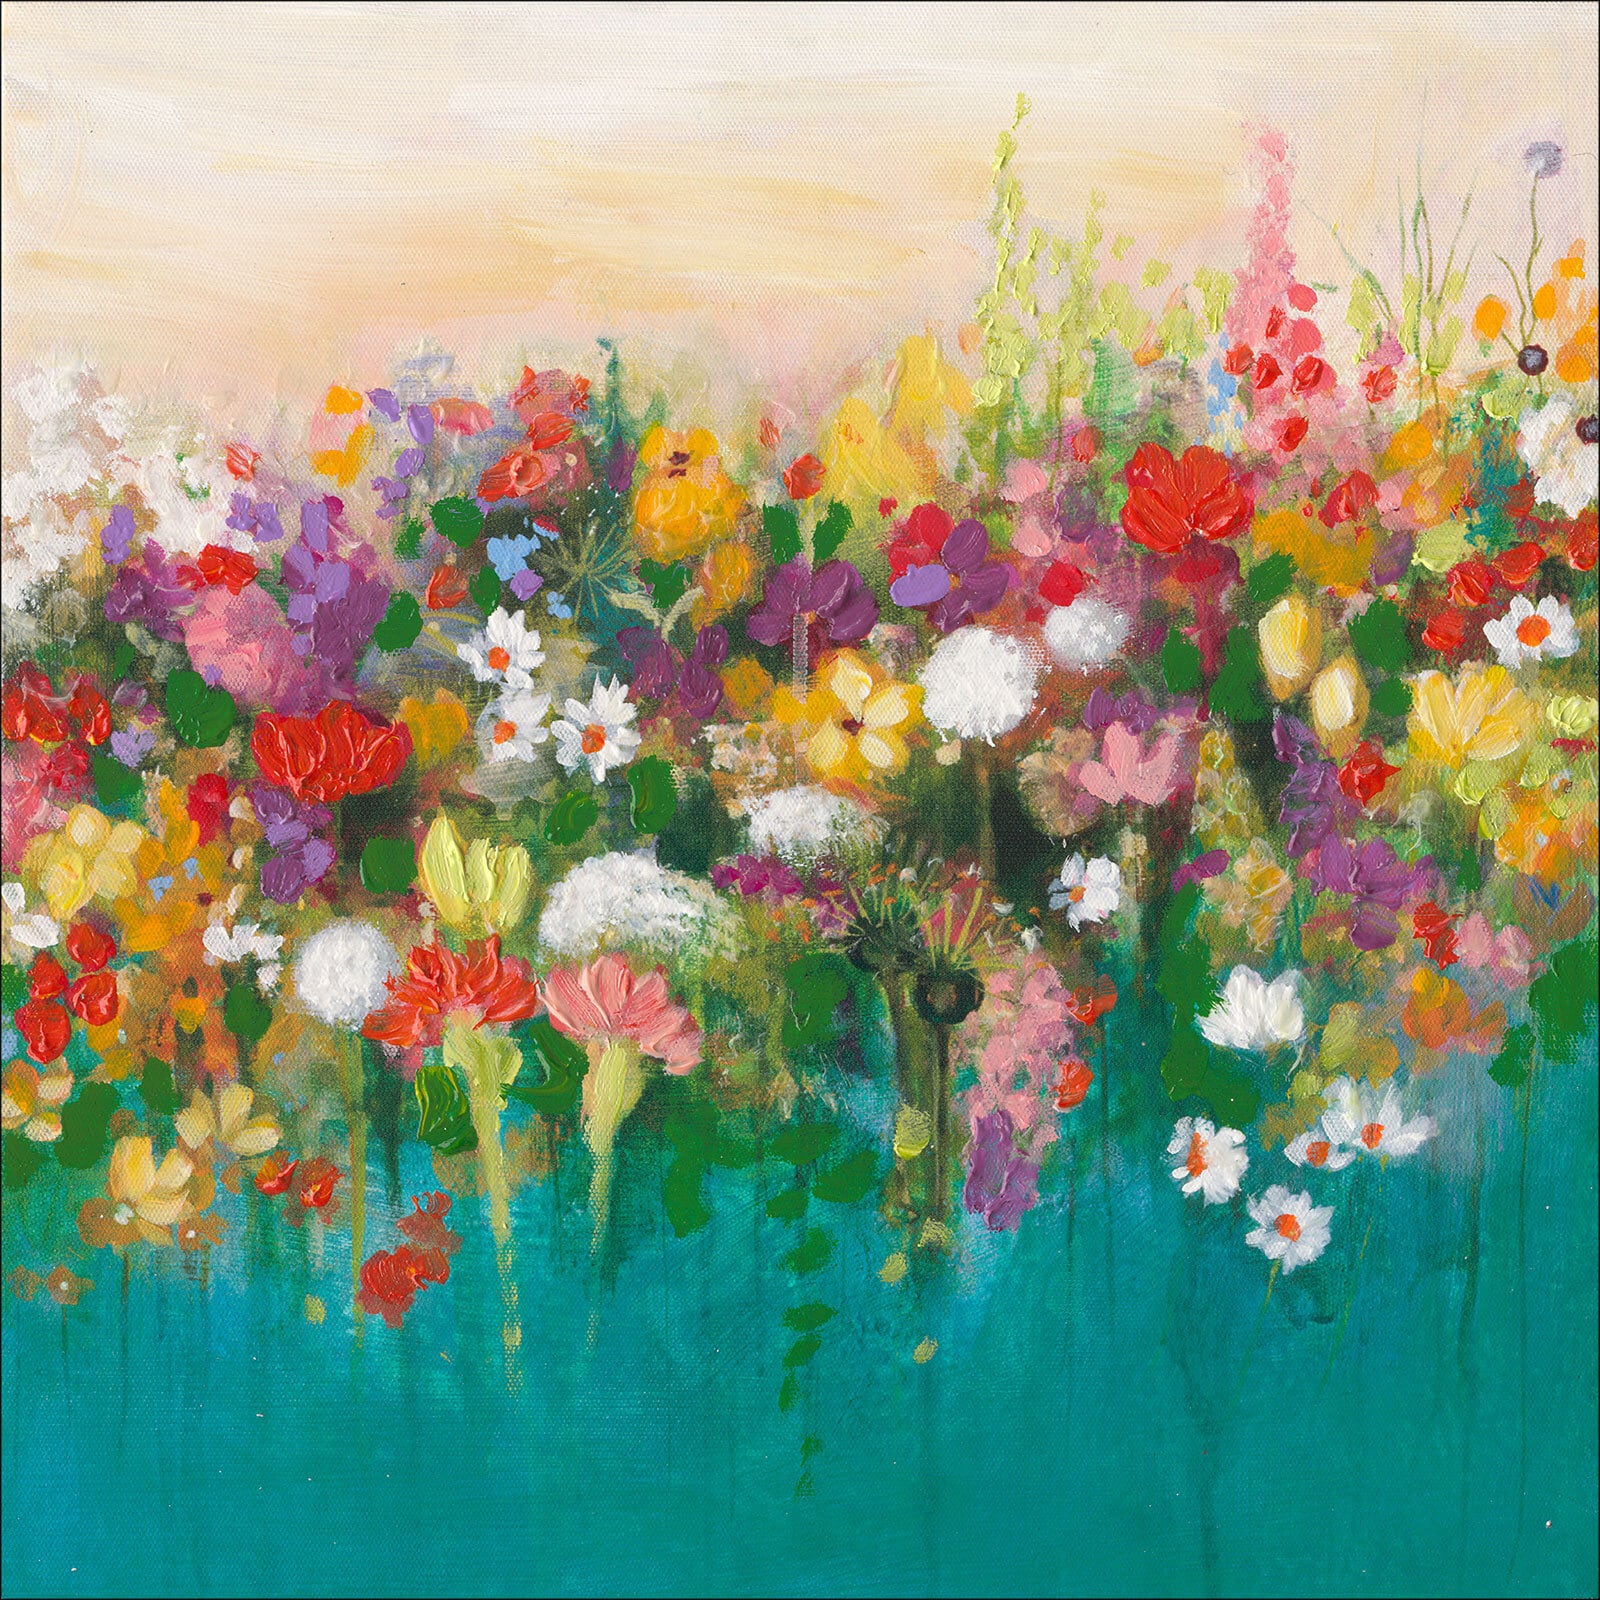 PRO ART Handpainting Bild BUNCH OF FLOWERS VI 40 x 40 cm Leinwand mehrfarbig